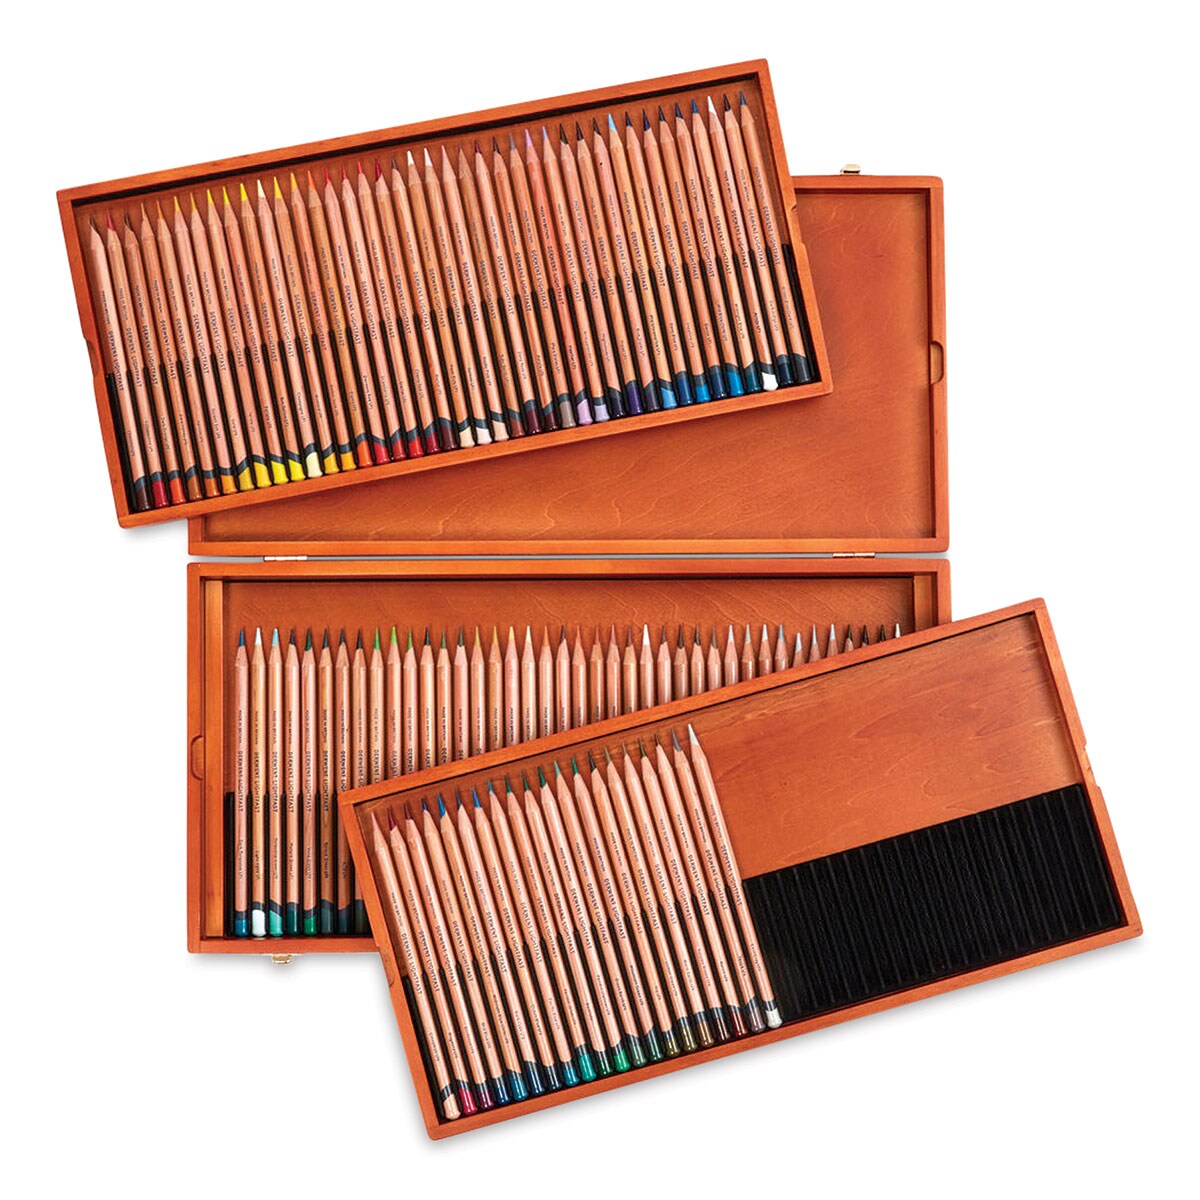 Derwent Lightfast Colored Pencils - Wood Box Set of 100